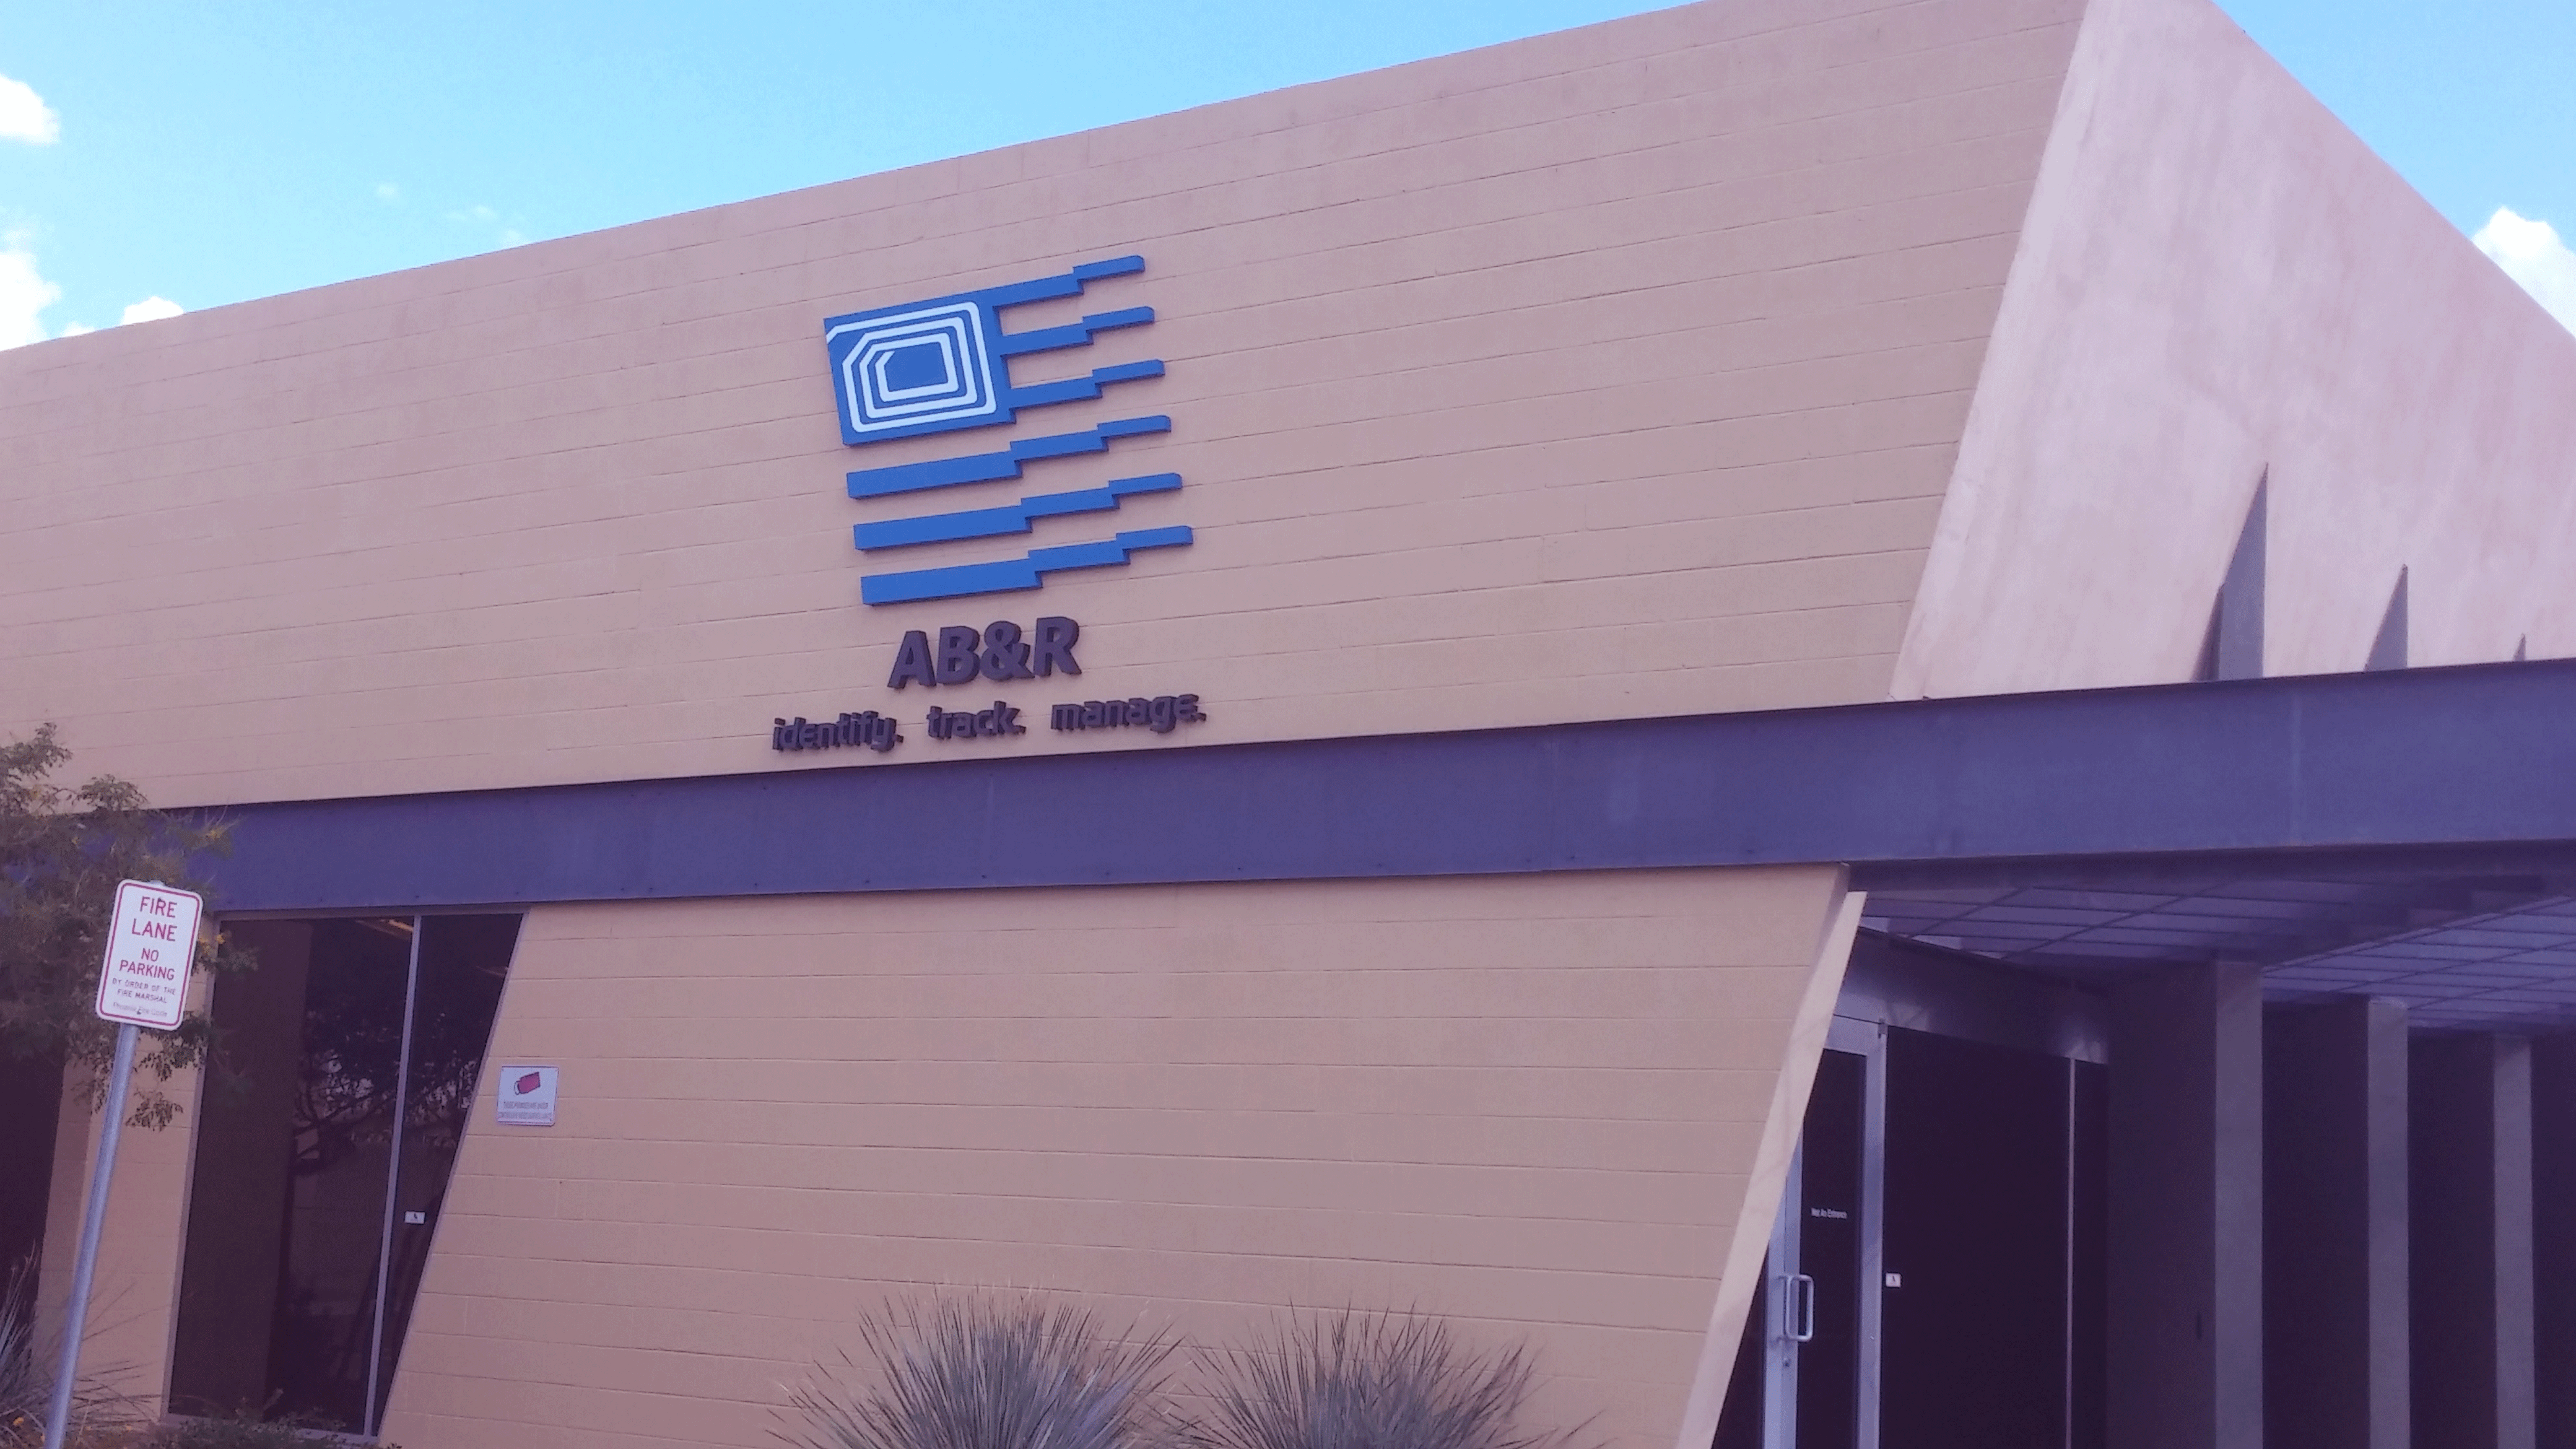 AB&R Building Sign